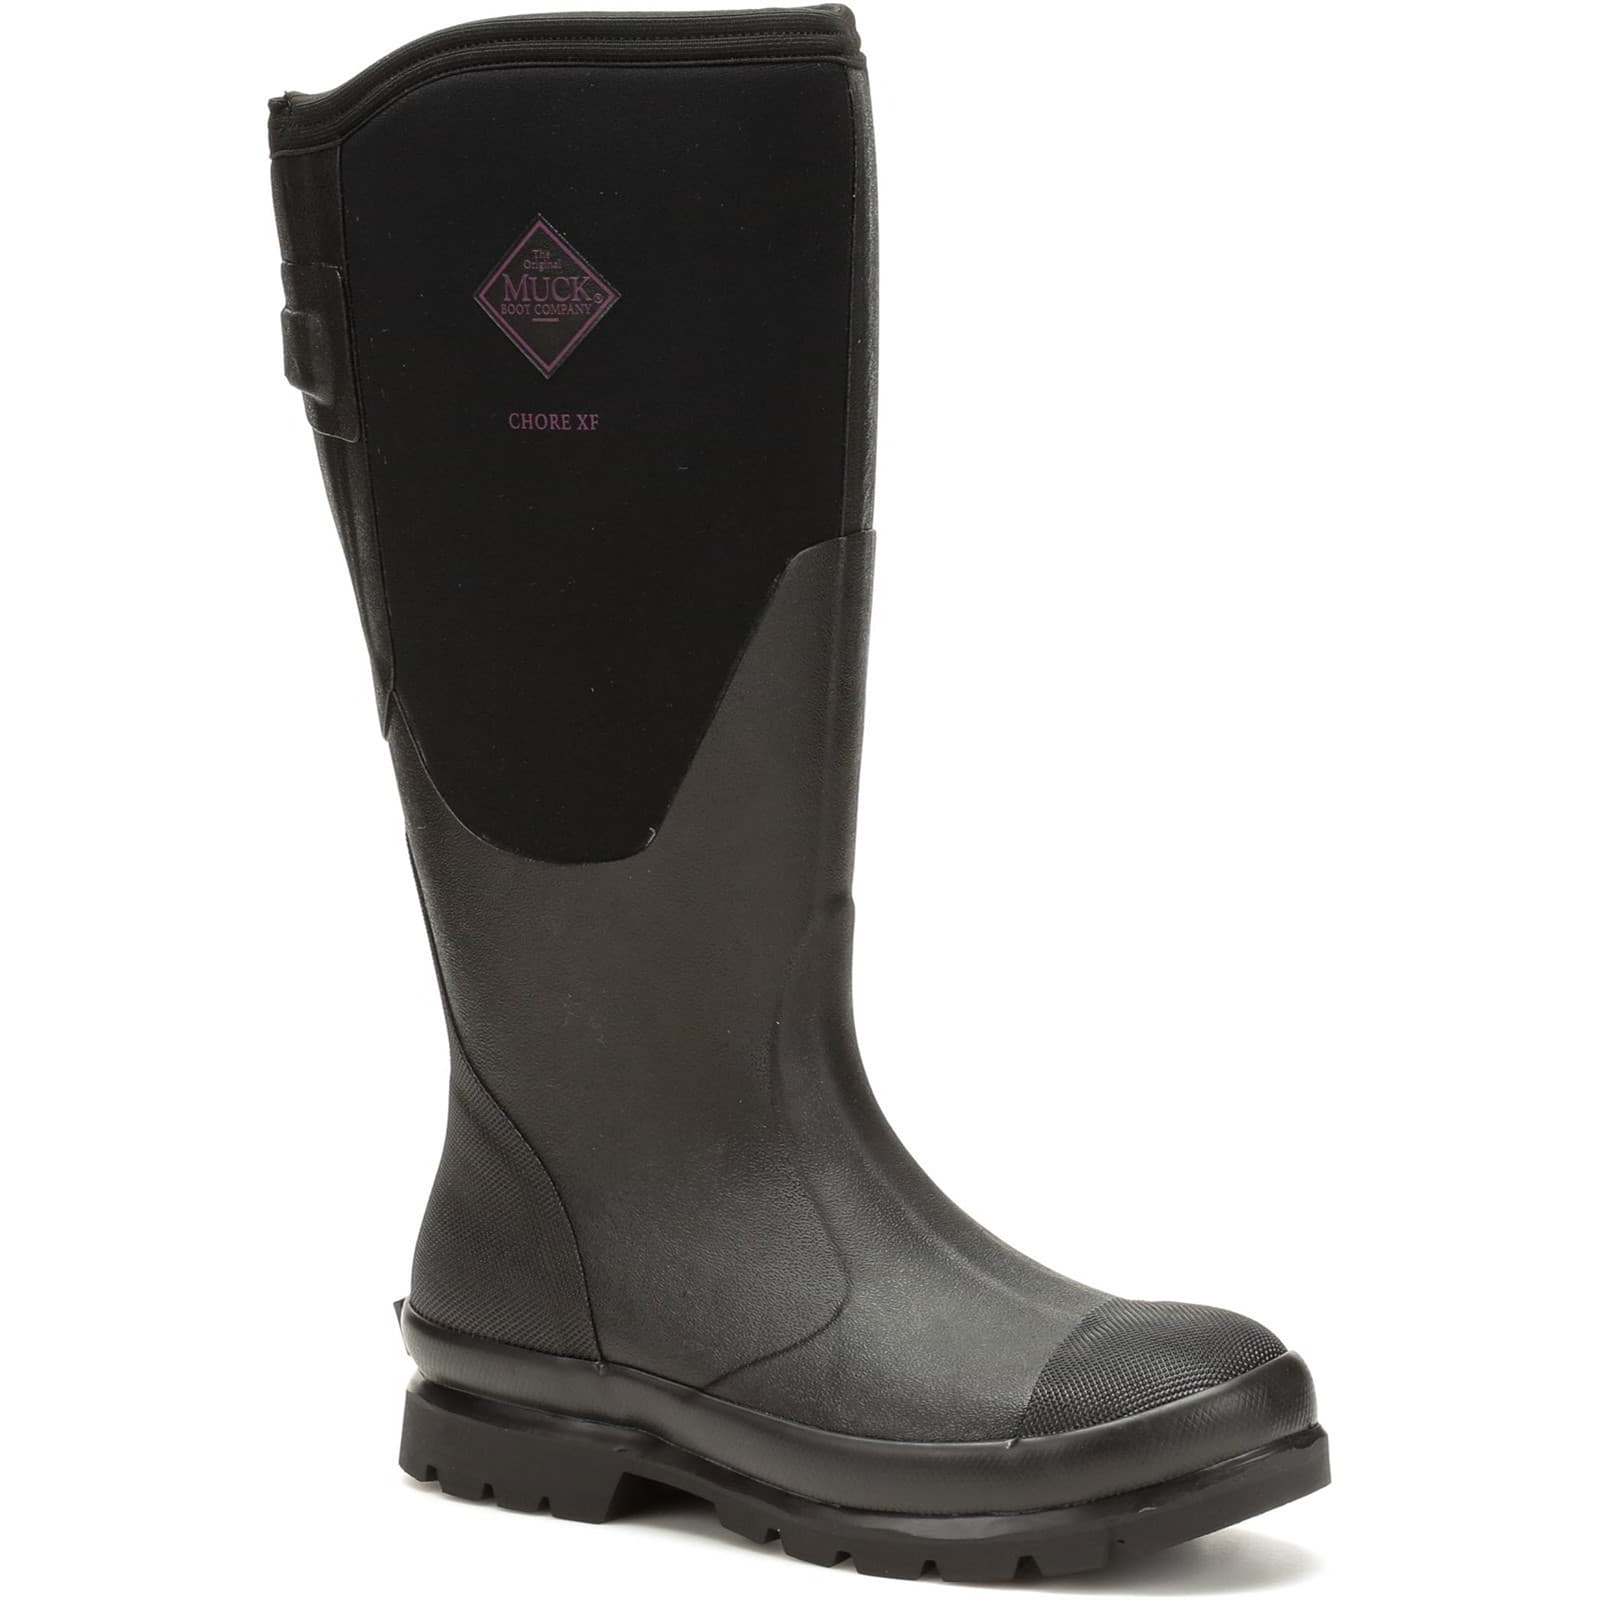 Muck Boots Women's Chore Adjustable Tall Neoprene Wellington Boots Wellies - UK 3